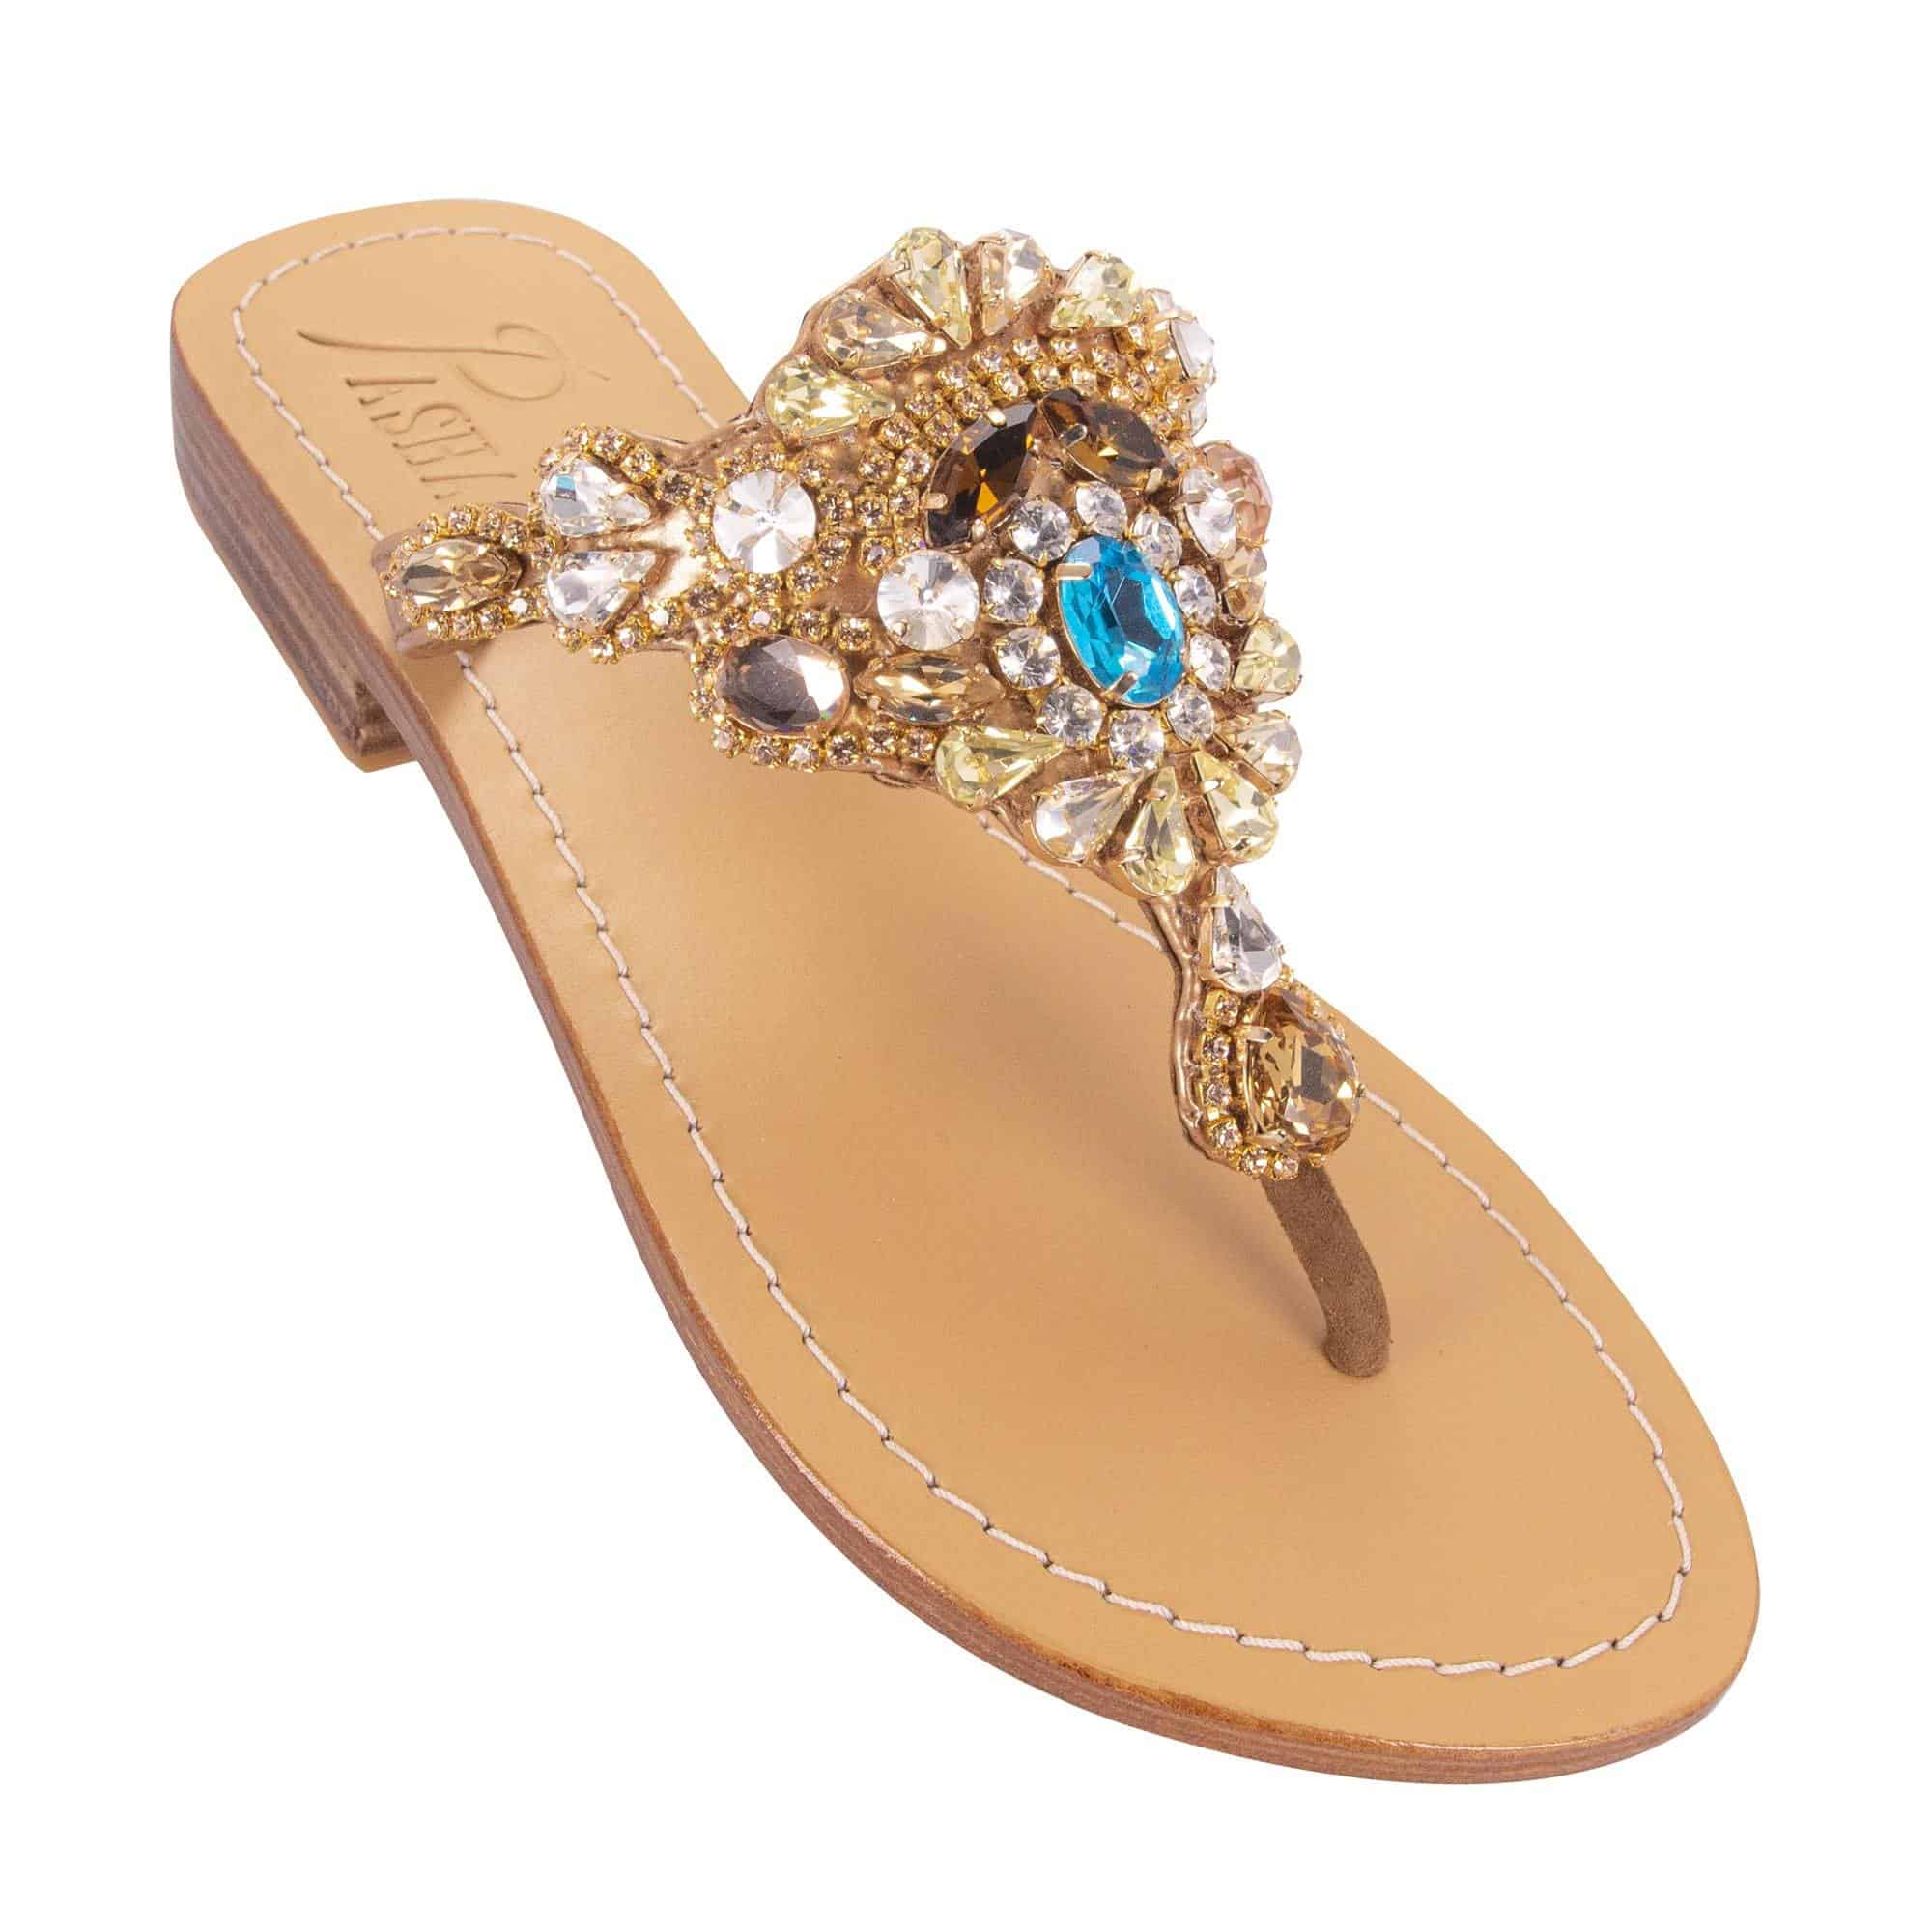 CORFU - Pasha - Jewelry for your feet